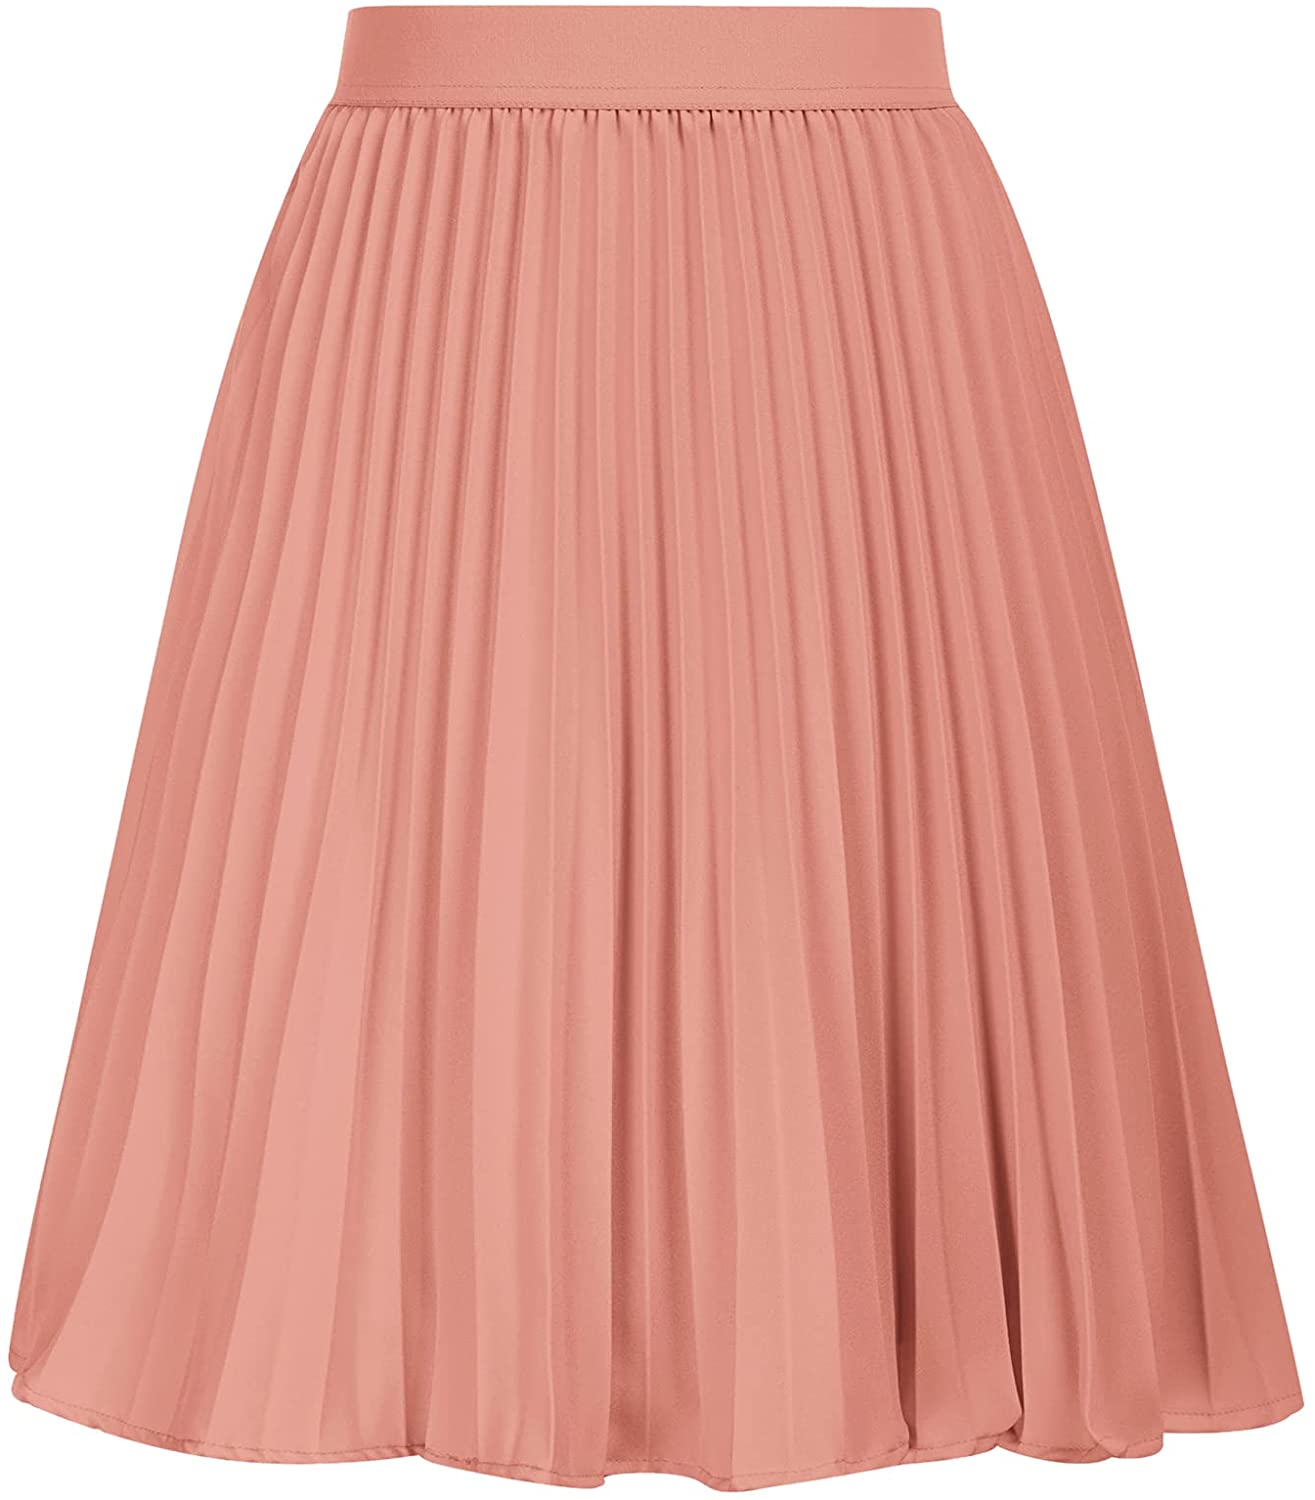 Kate Kasin Women's High Waist Pleated A-Line Swing Skirt KK659 | eBay